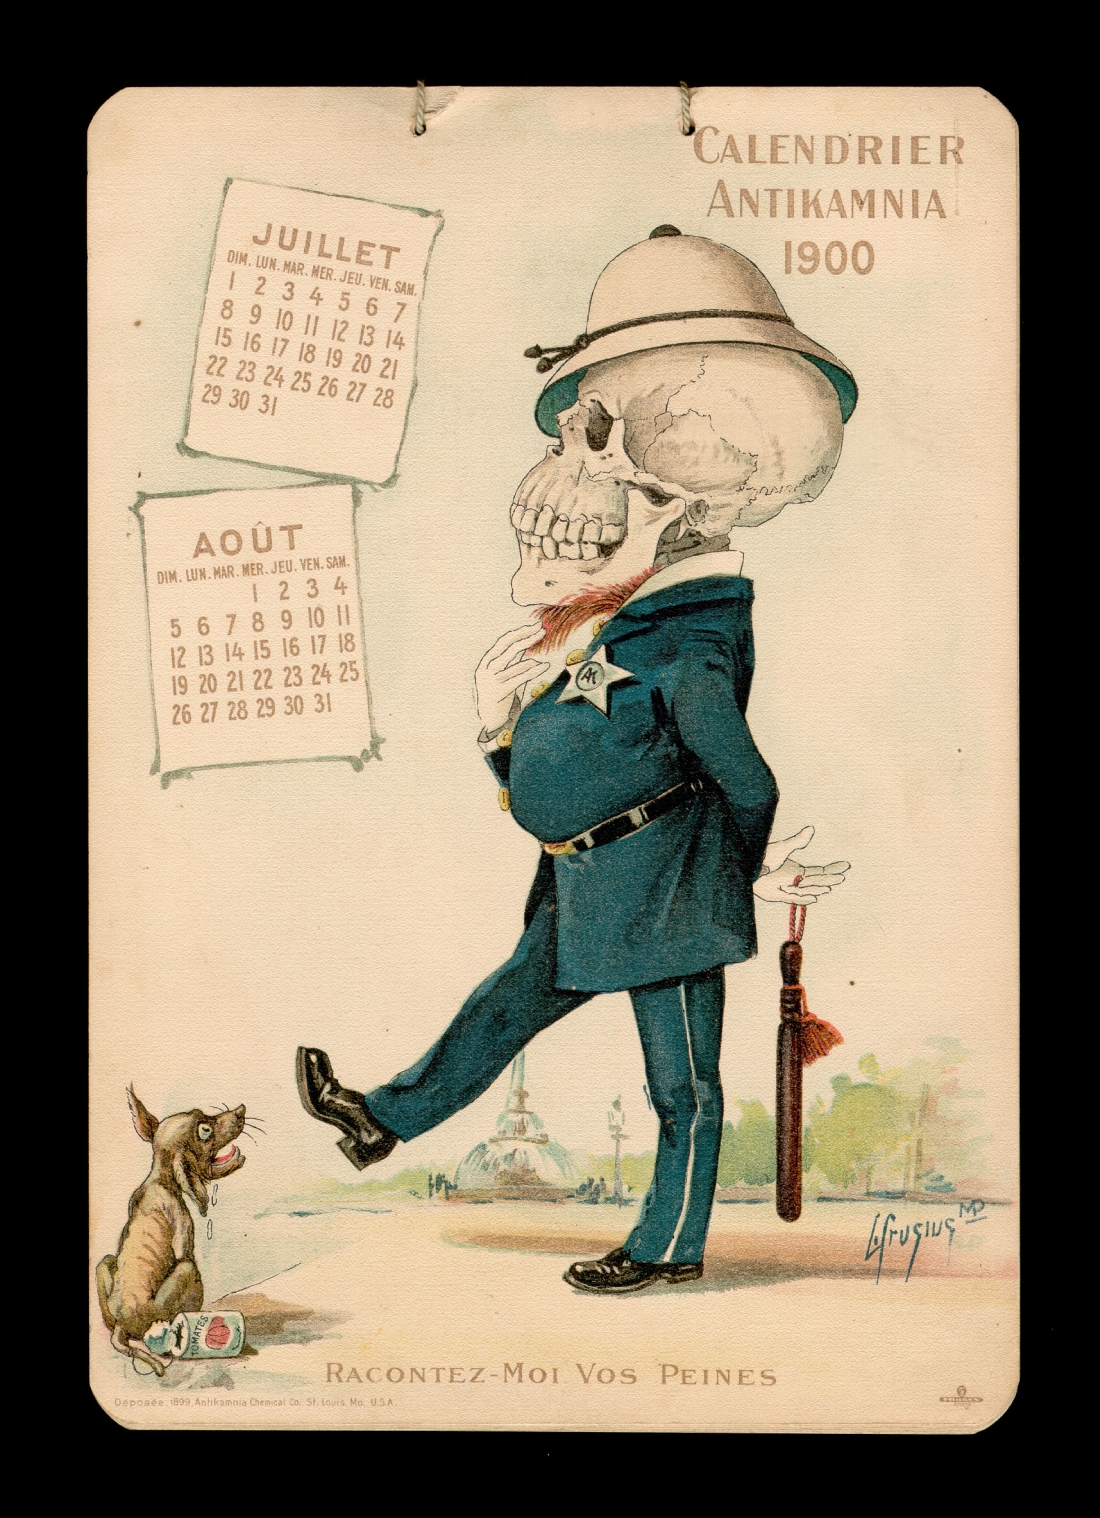 Antikamnia calendar 1900 - francais